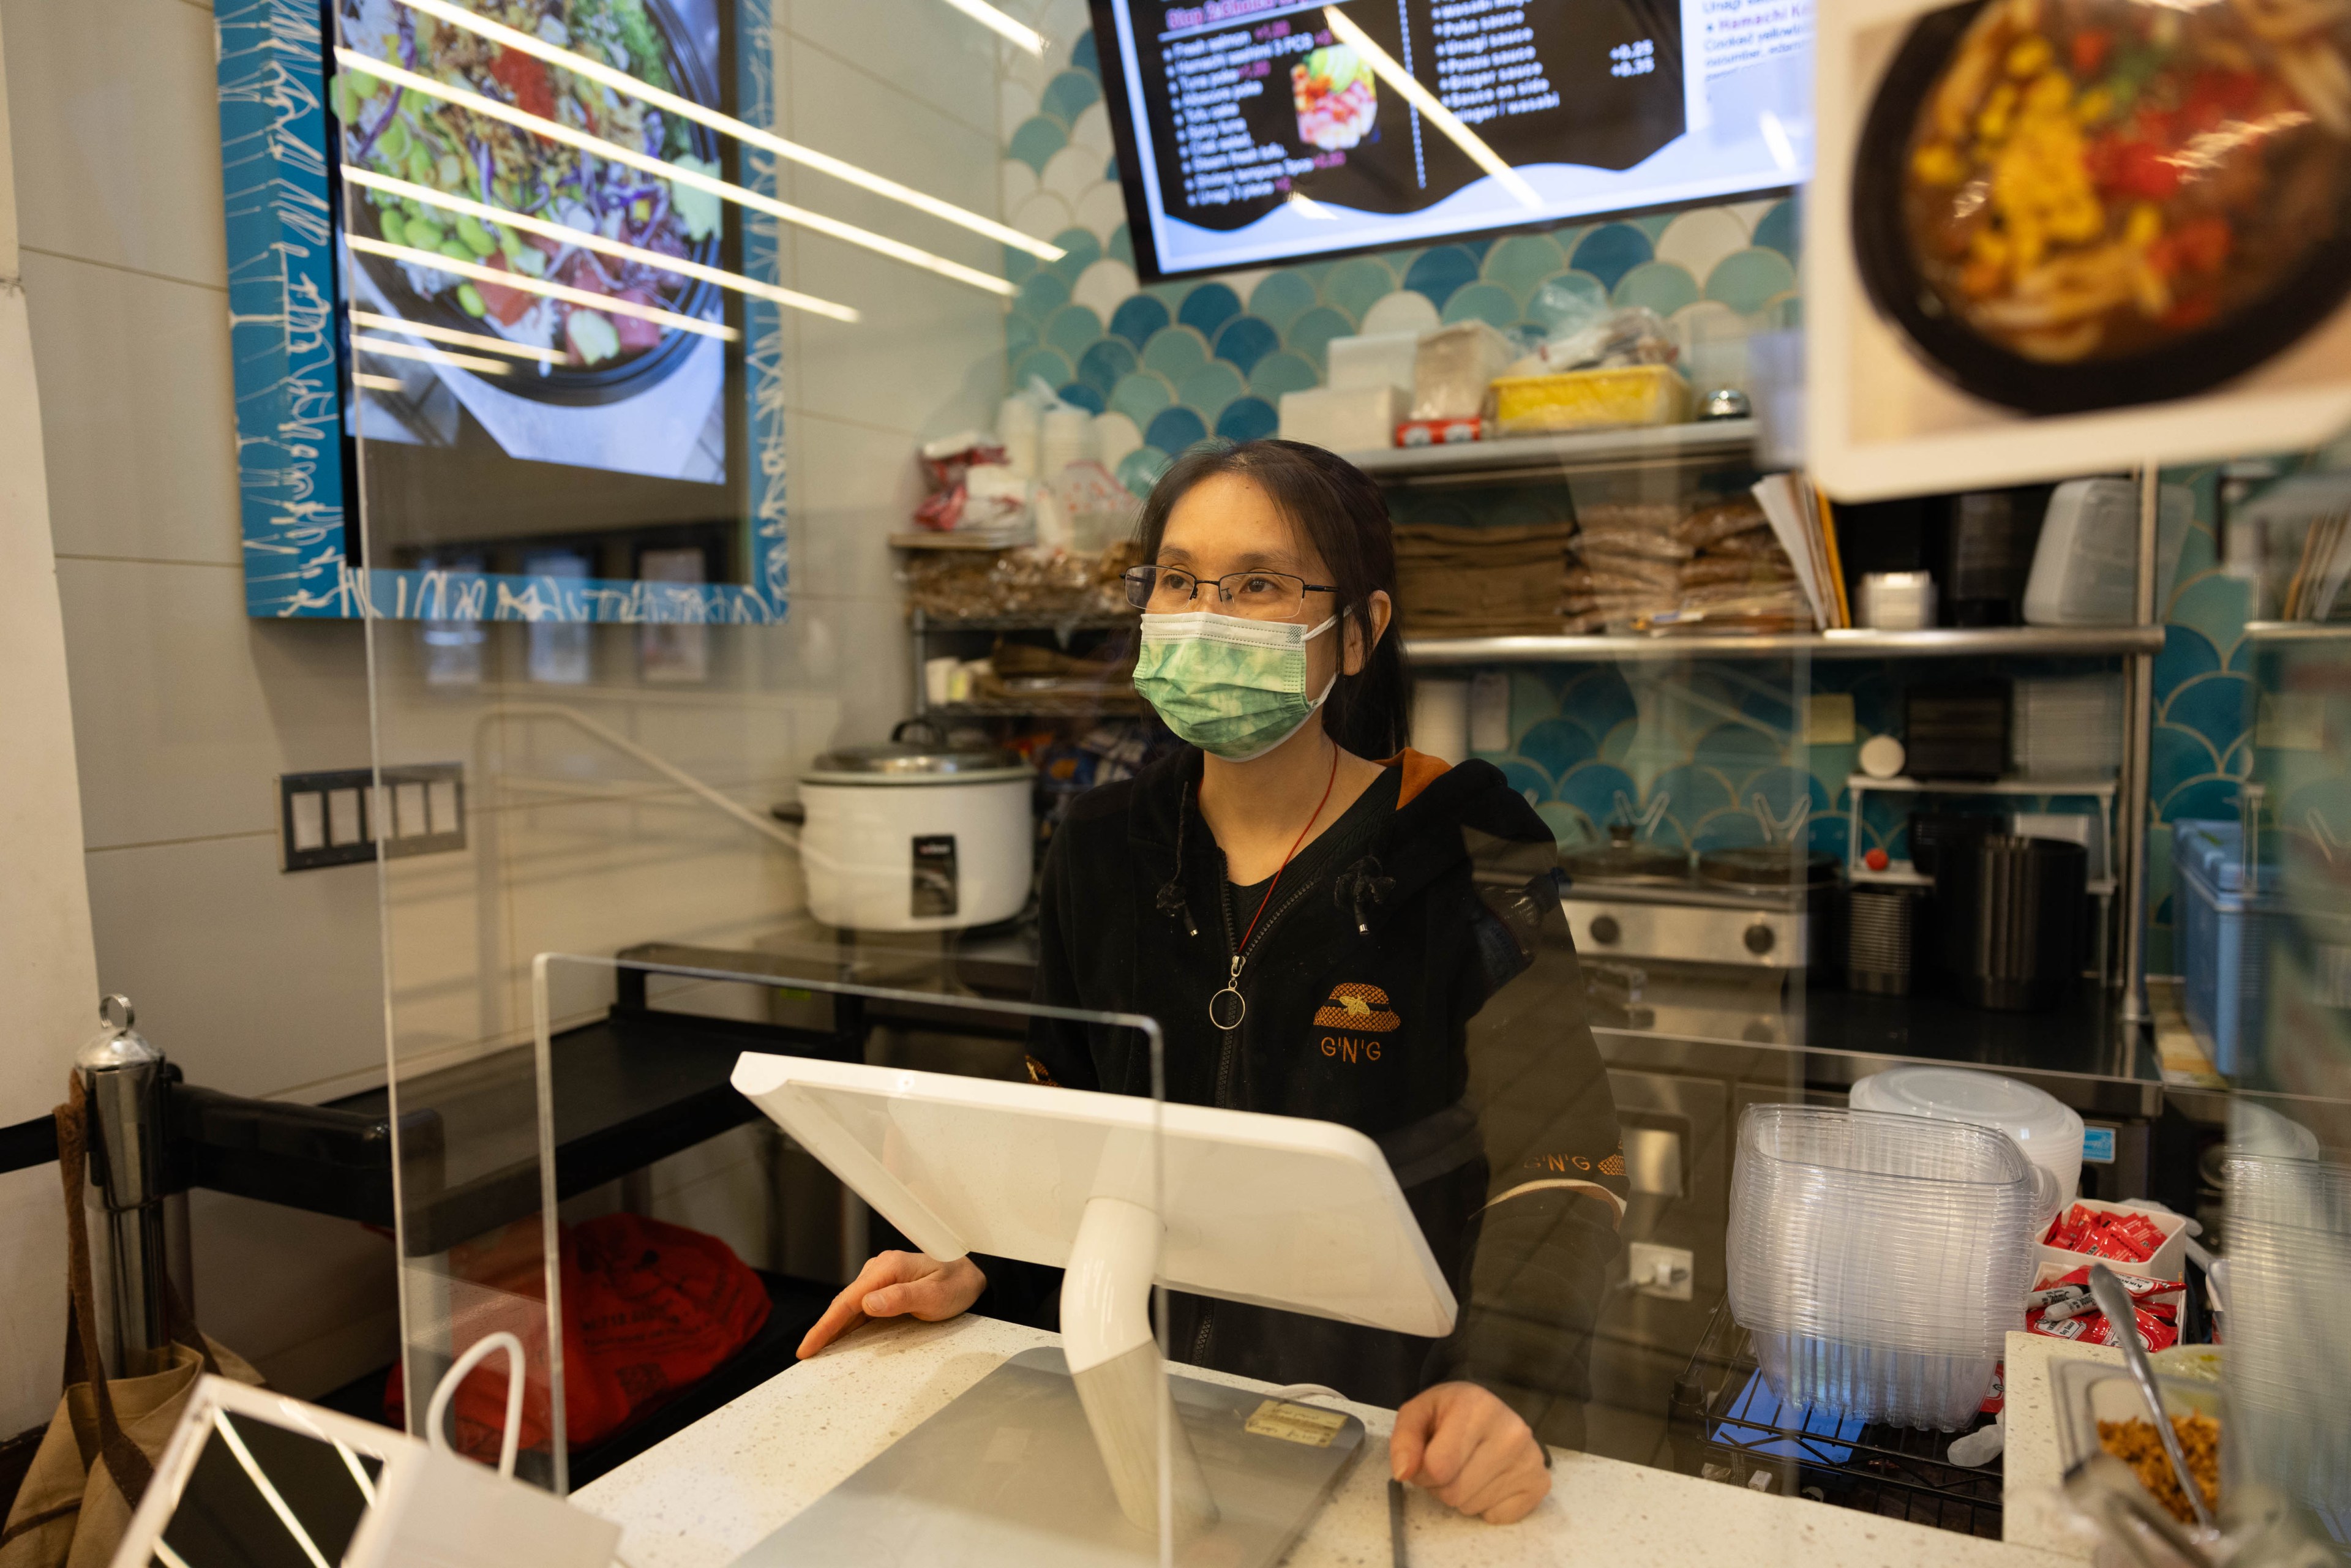 A woman stands behind a cash register at a restaurant counter.